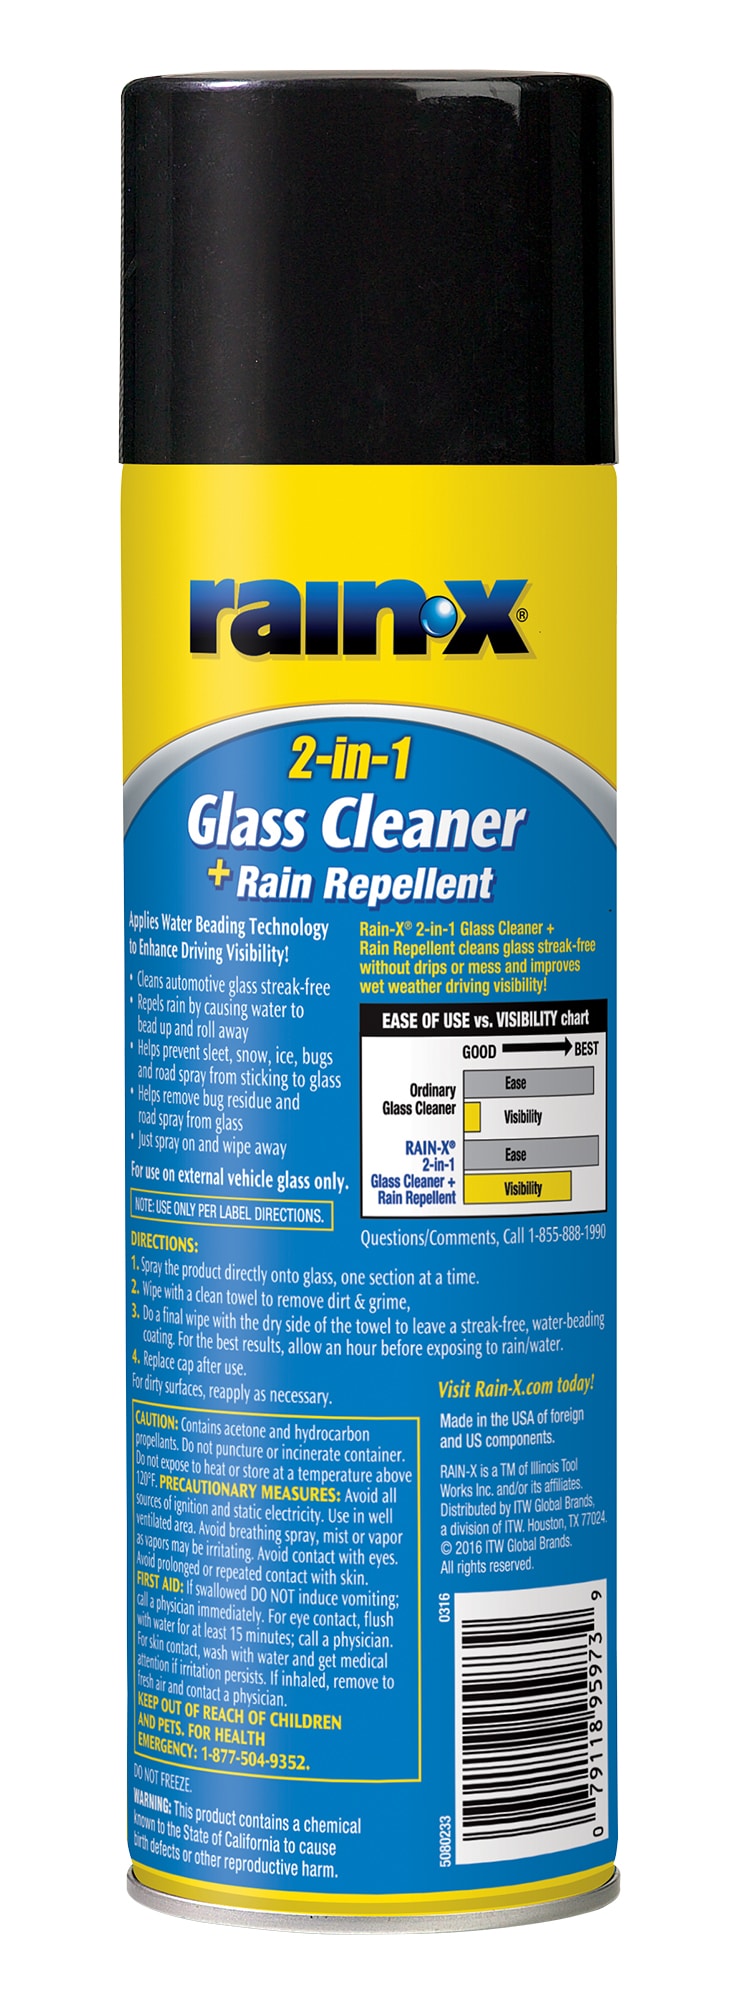 ITW Global 8107245 23 oz Glass Rain-X Cleaner, 1 - Food 4 Less